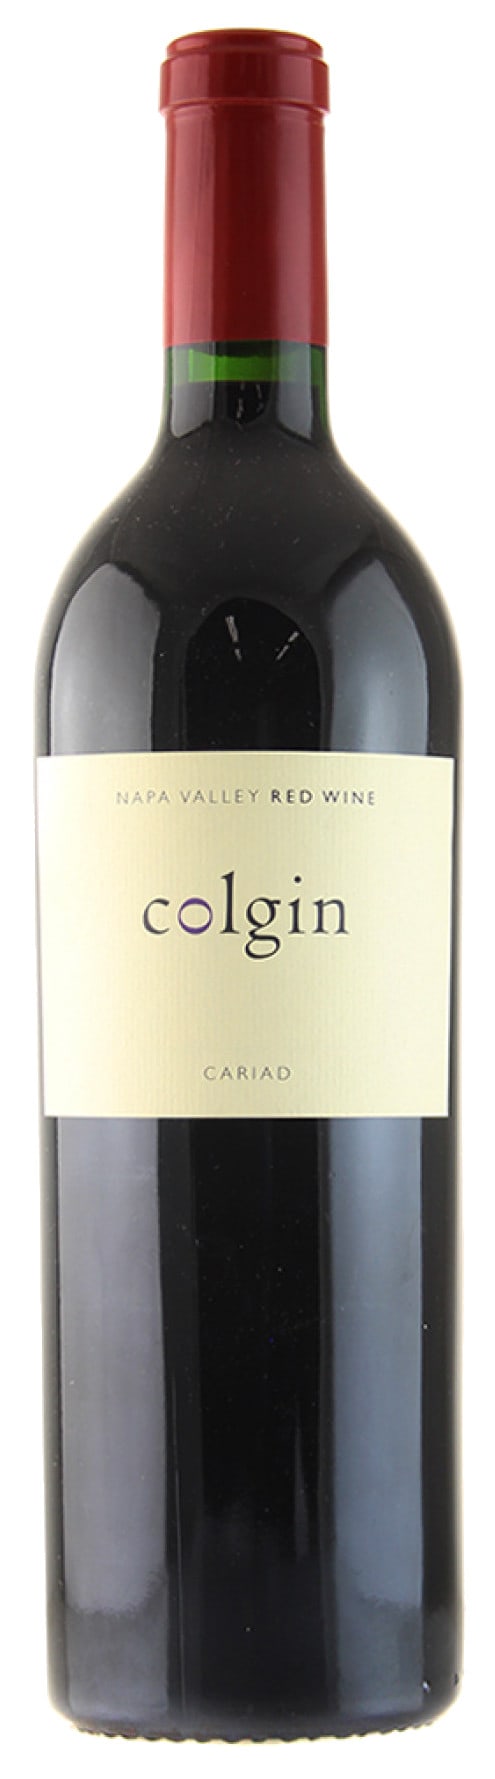 2005 Colgin Cariad Red Wine, Napa